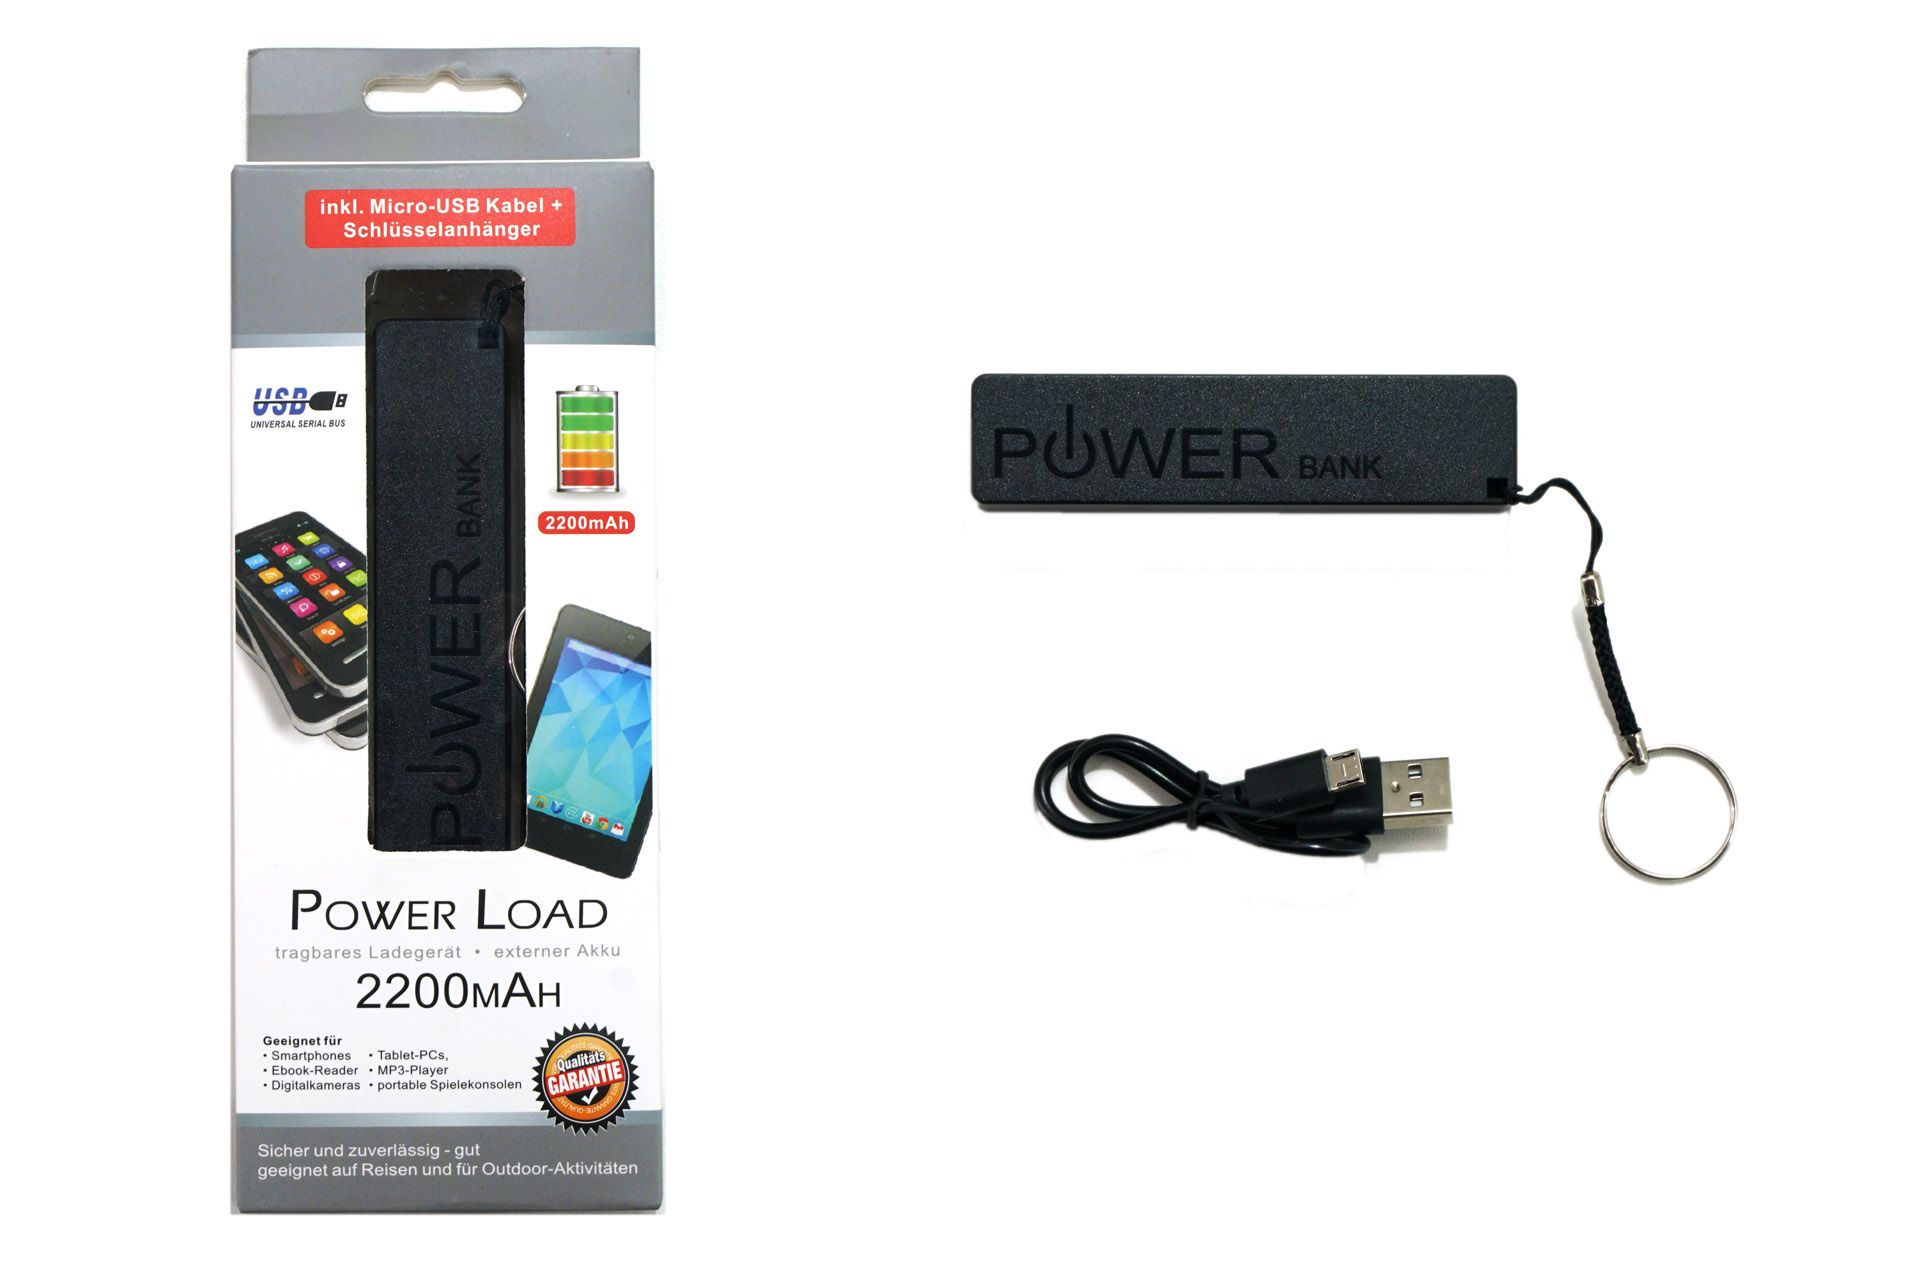 PowerLoad Tragbares Ladegerät 2200mAh Externer Akku inkl. Micro-USB Kabel